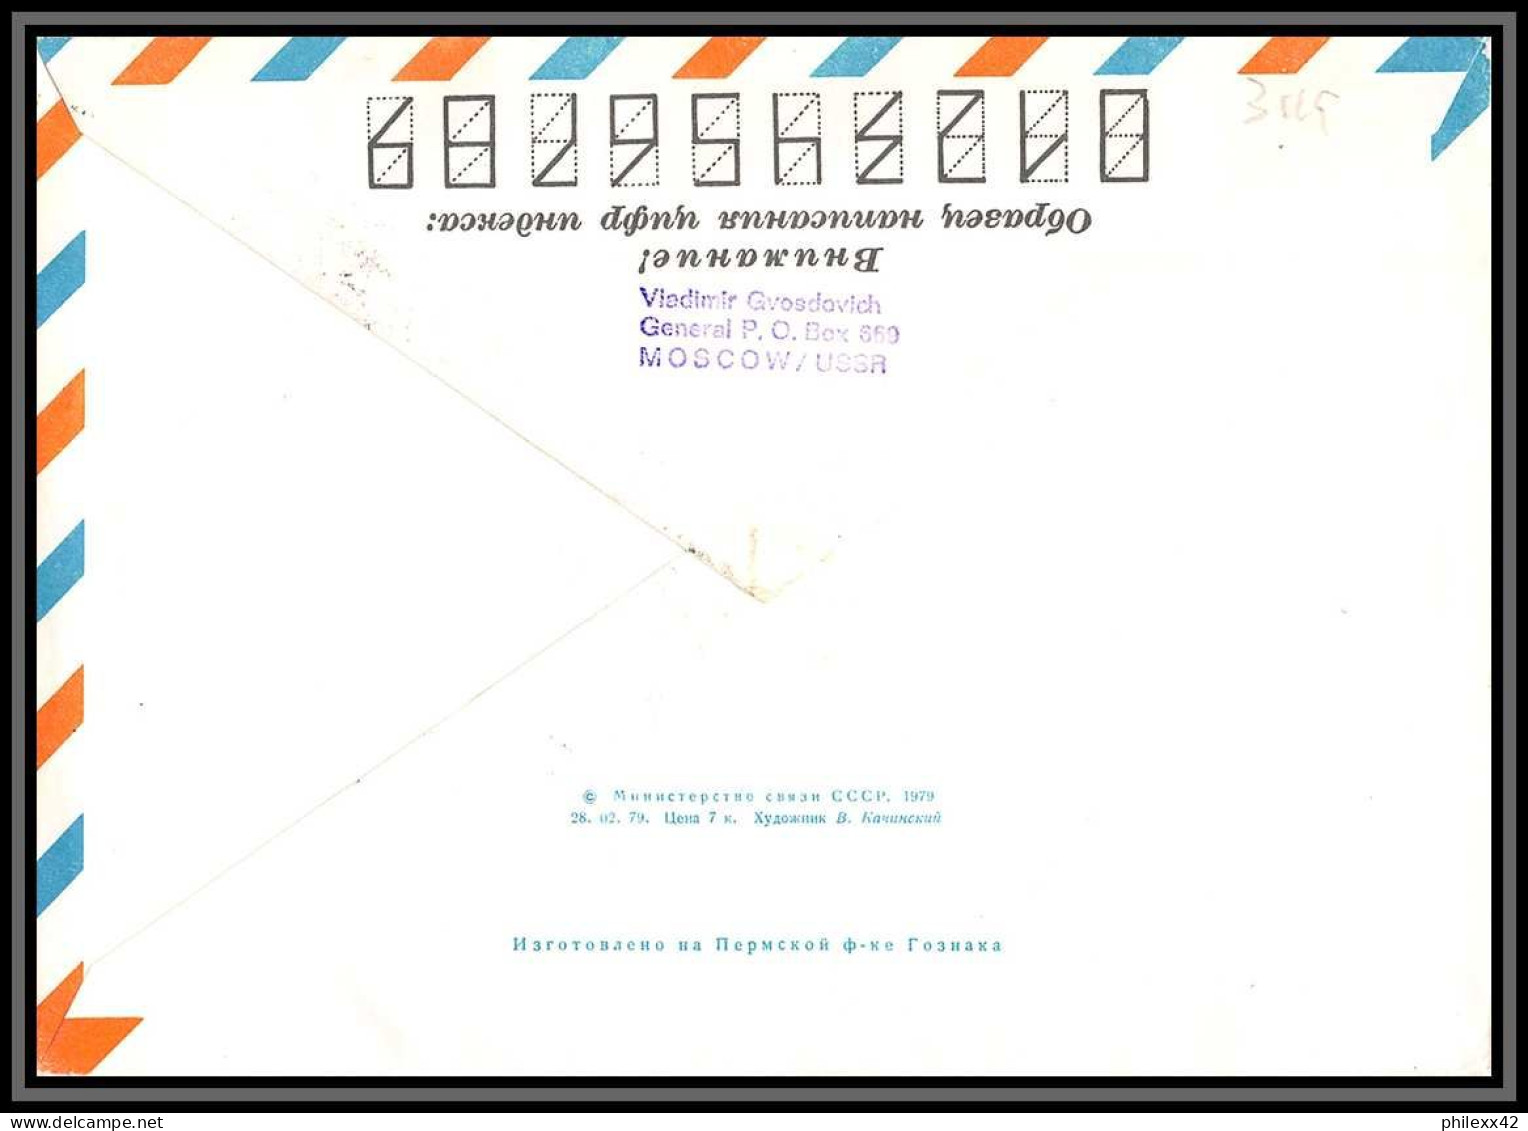 3119 Espace (space) Entier Postal (Stamped Stationery) Russie (Russia Urss USSR) Soyuz (soyouz Sojus) 34 28/6/1979 - Russie & URSS